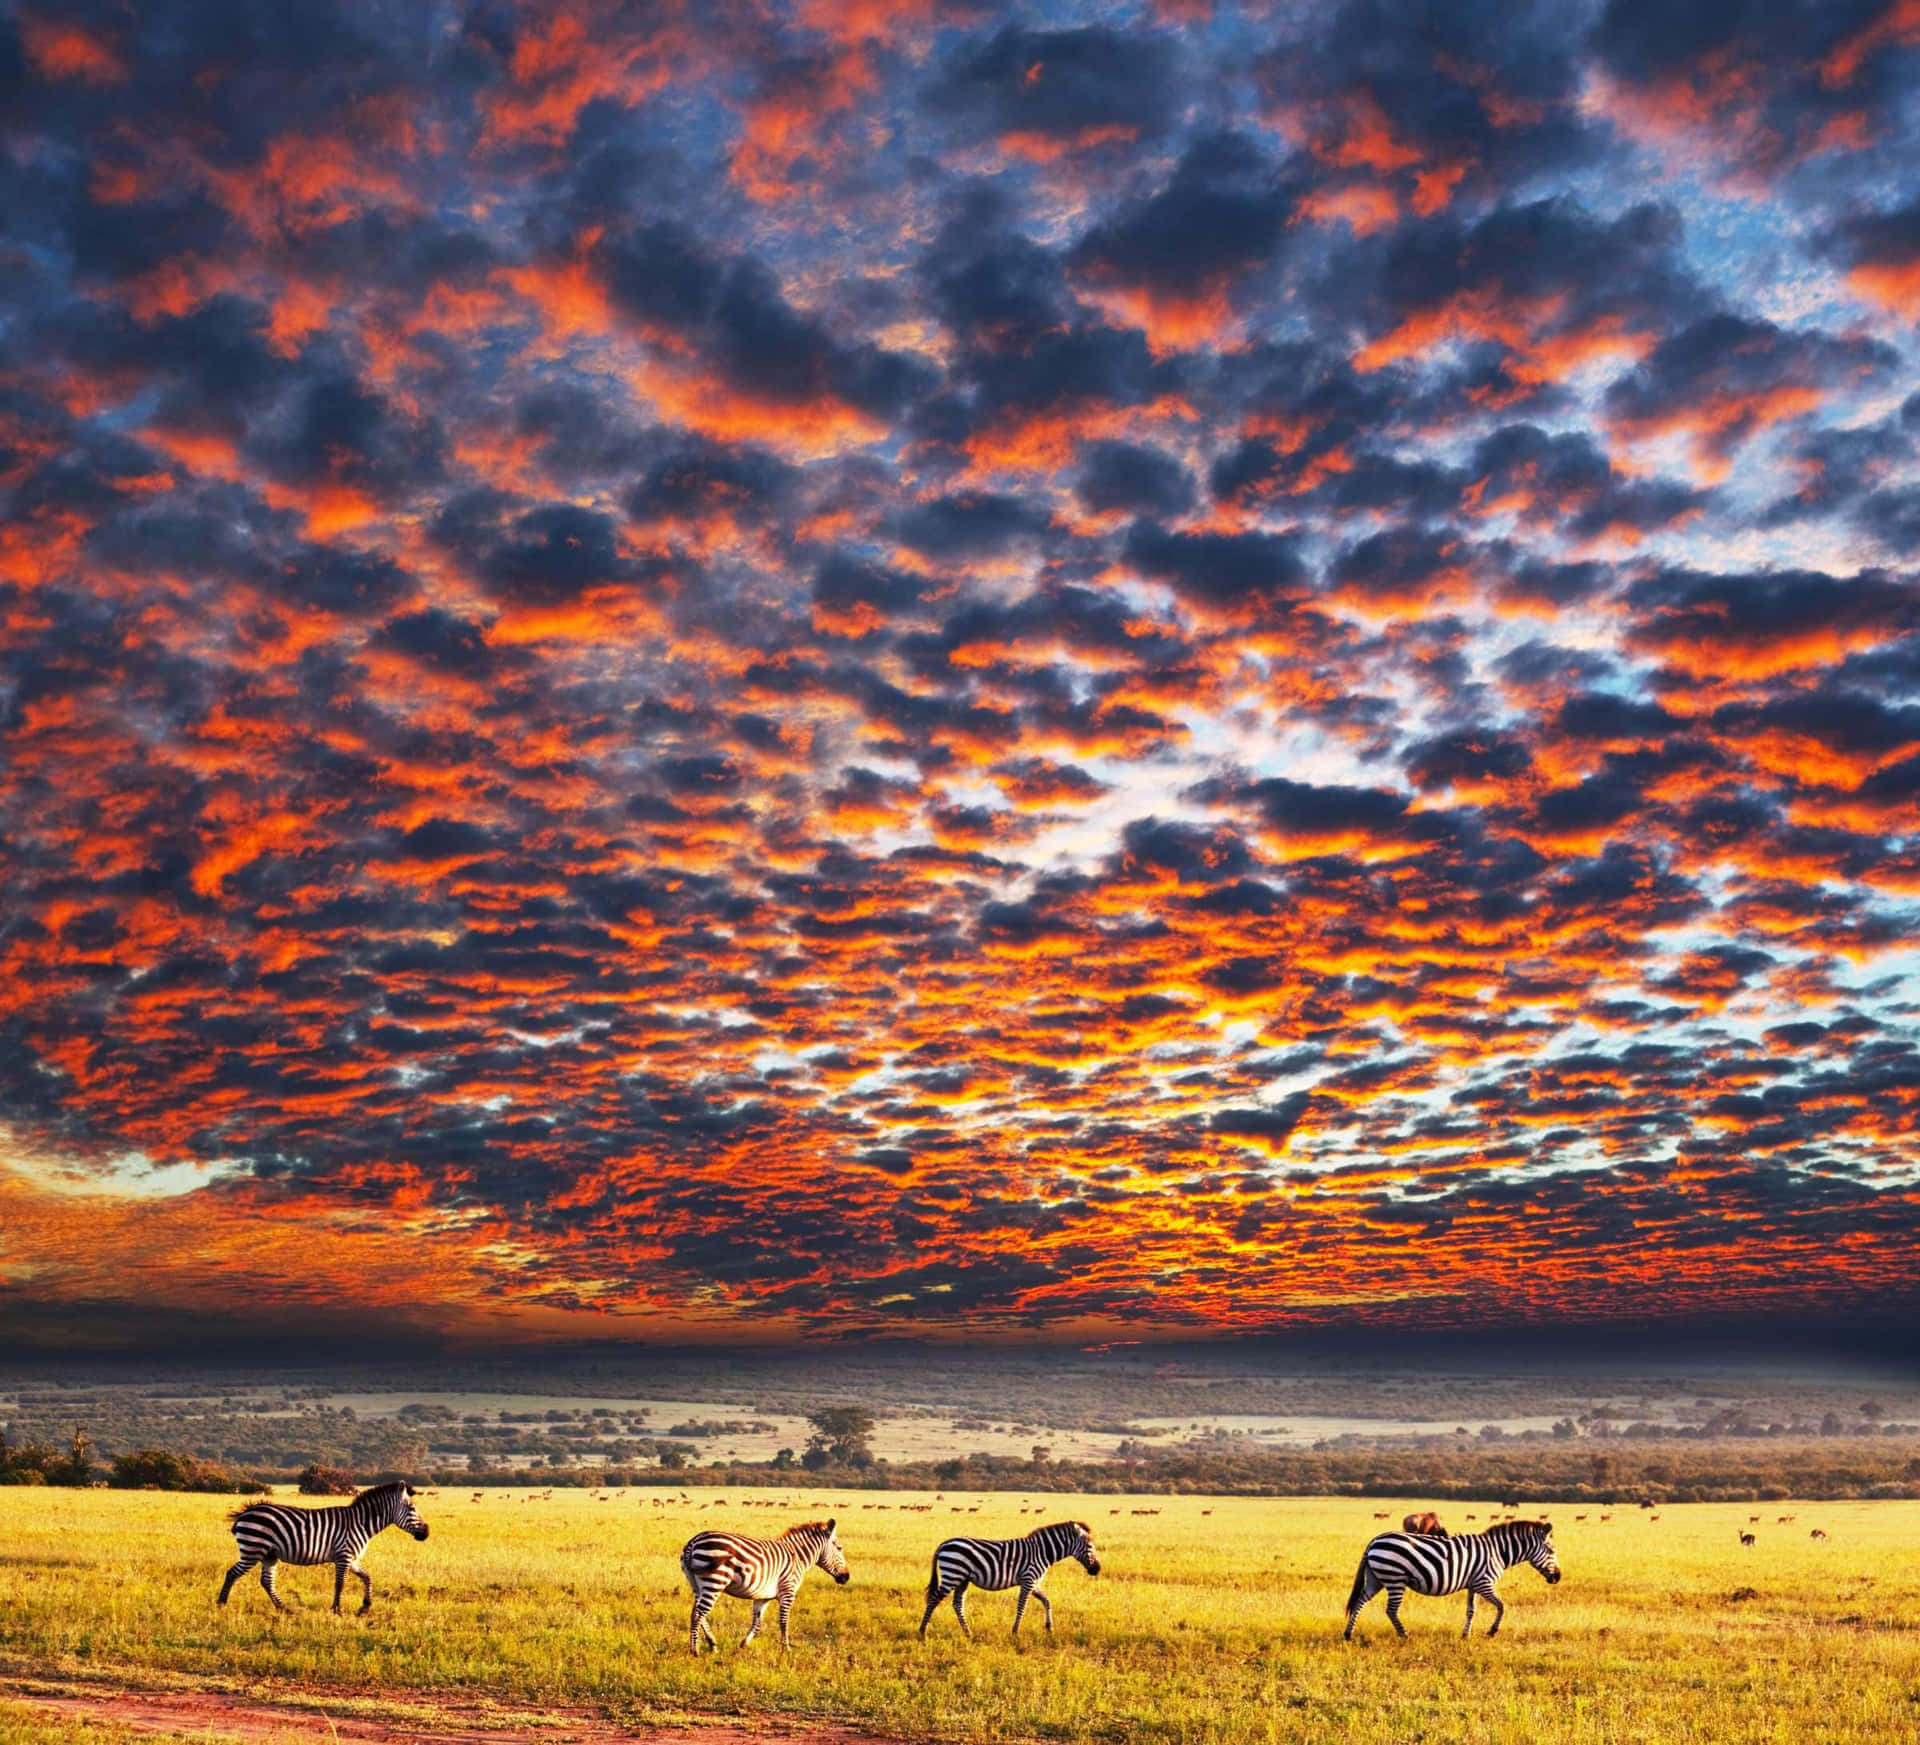 Caption: Zebras Grazing Under Majestic Orange Sky in Serengeti National Park Wallpaper